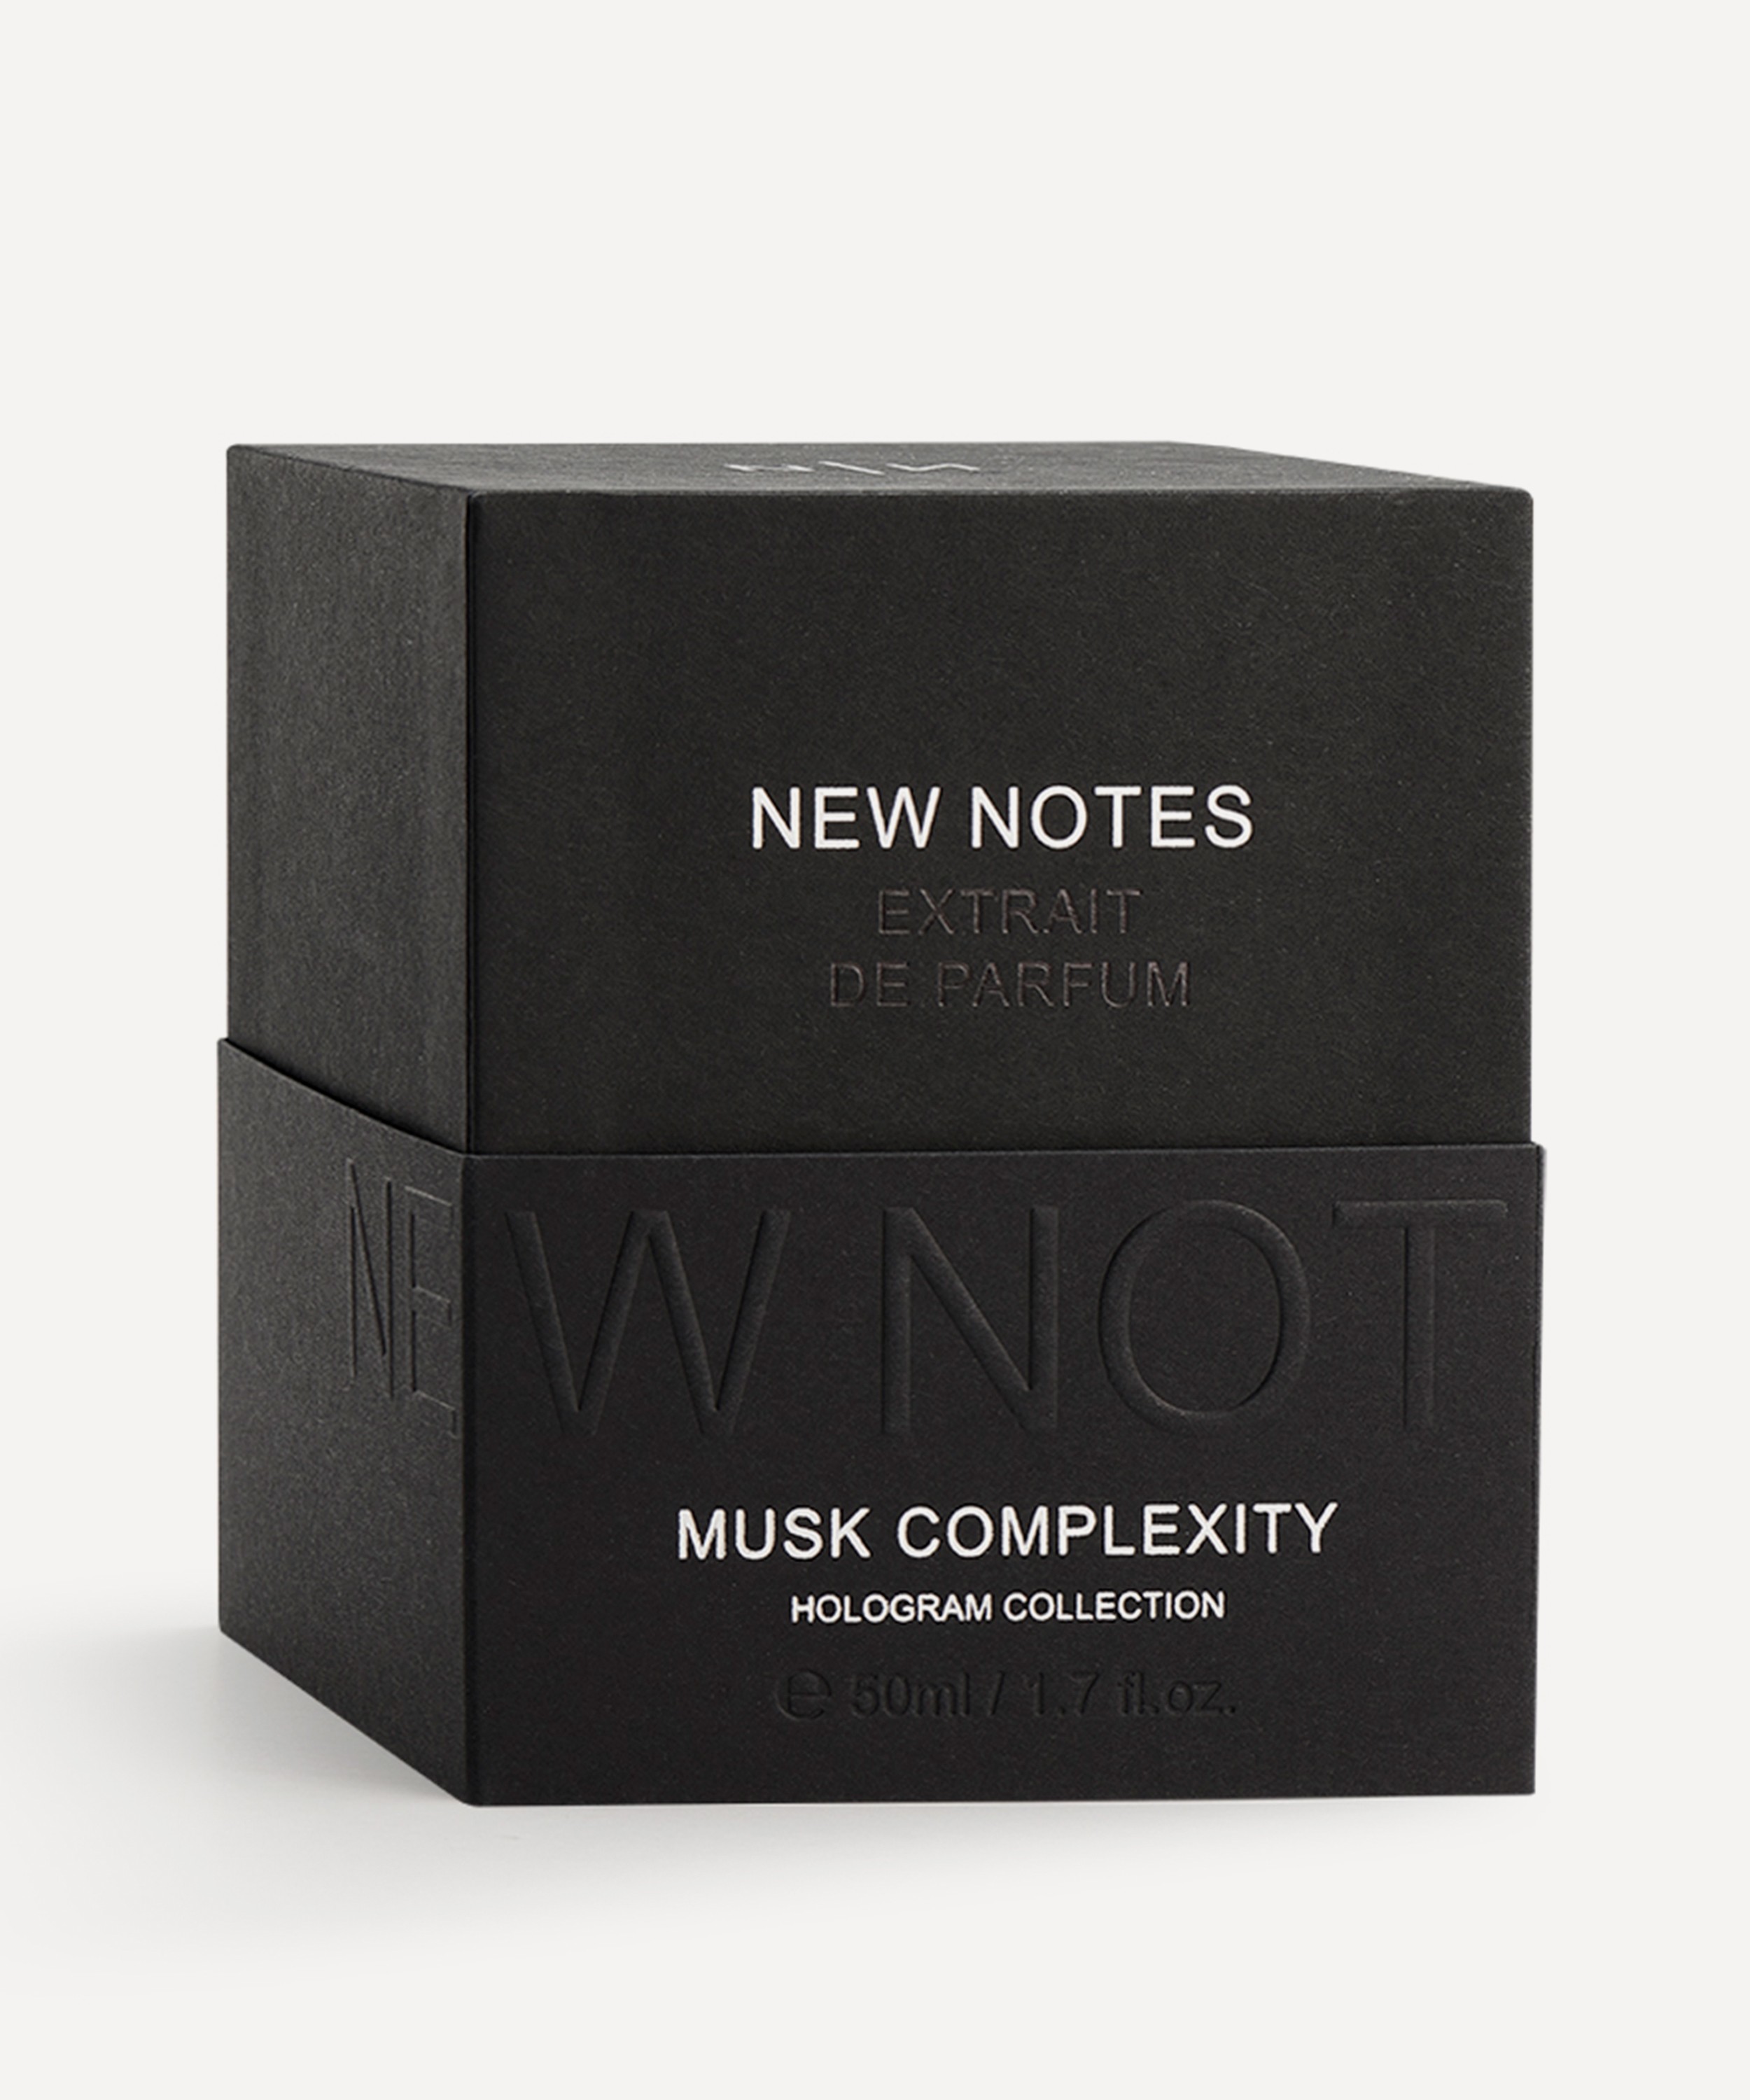 New Notes - Musk Complexity Extrait de Parfum 50ml image number 3